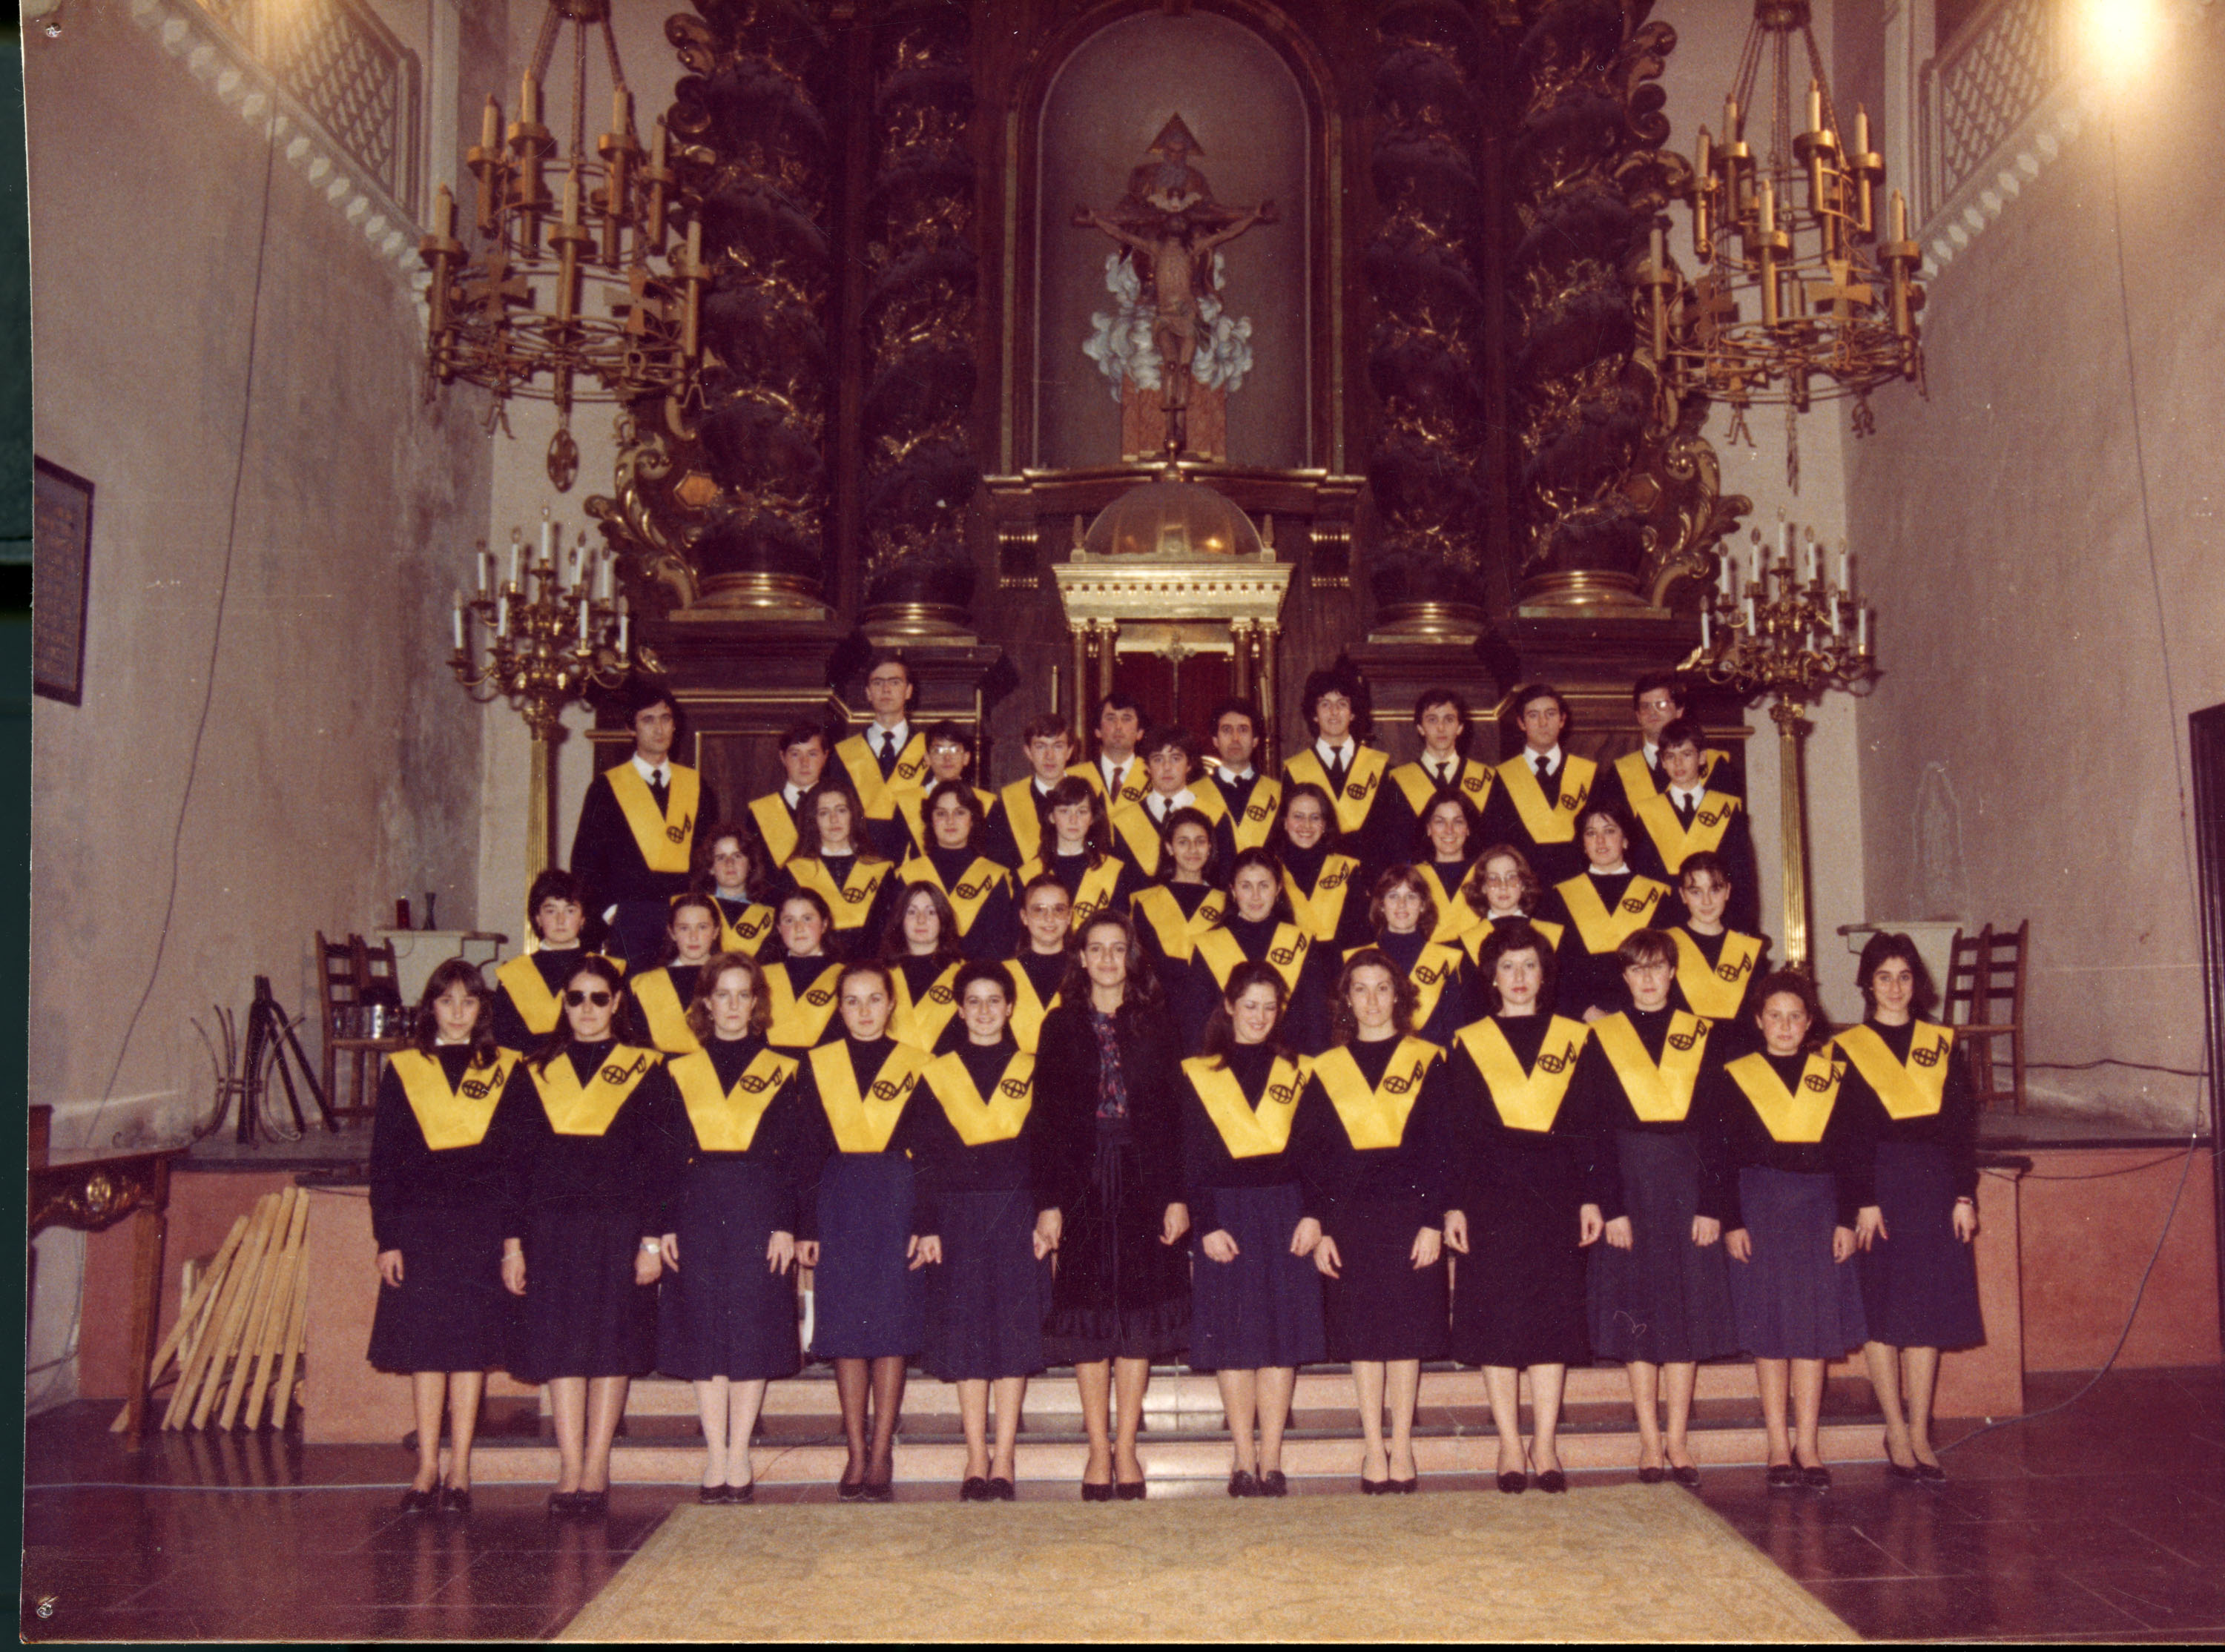 1983semana_santa_seminario-1-4-83-1